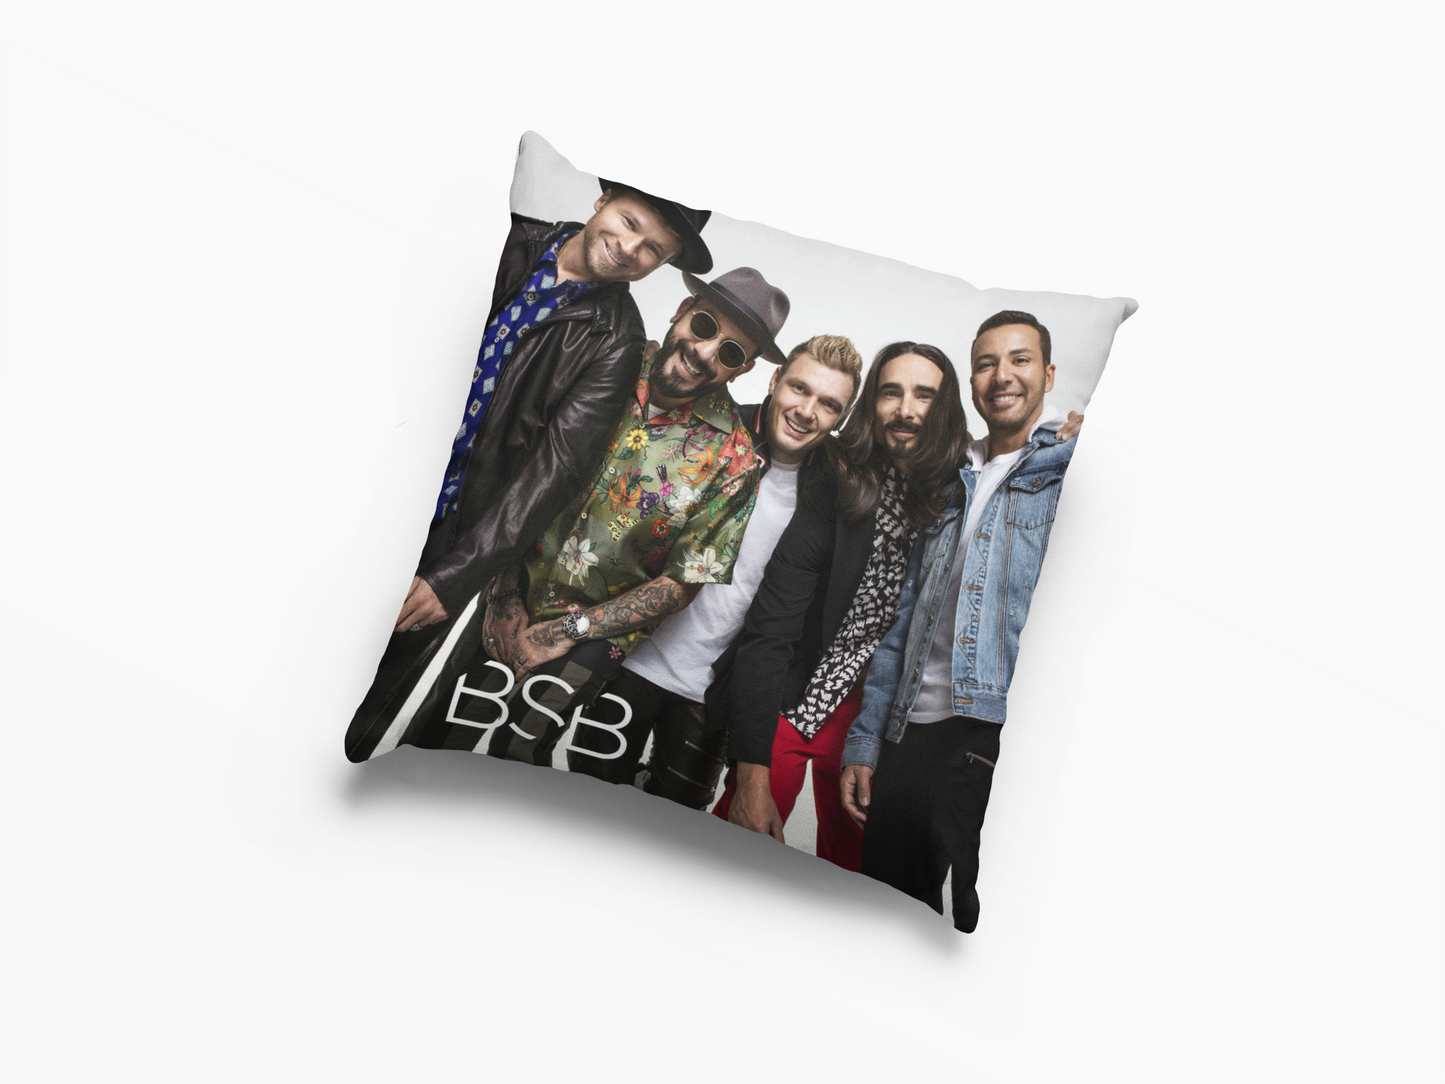 Backstreet Boys 2018 Cushion Case / Pillow Case